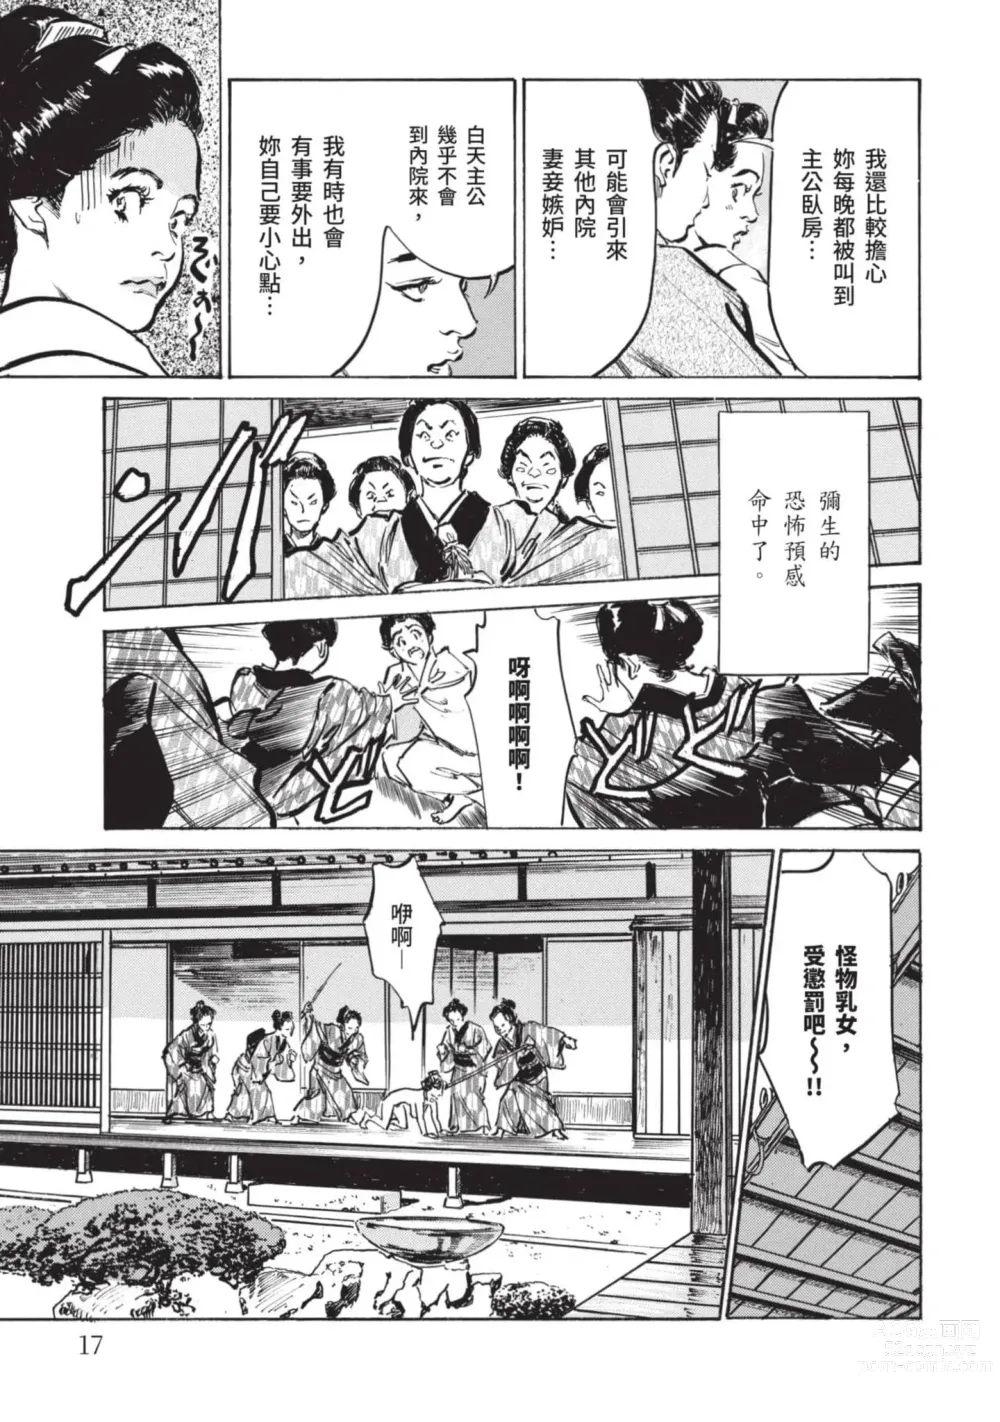 Page 16 of manga Inshuu Hiroku Midare Mandara 2